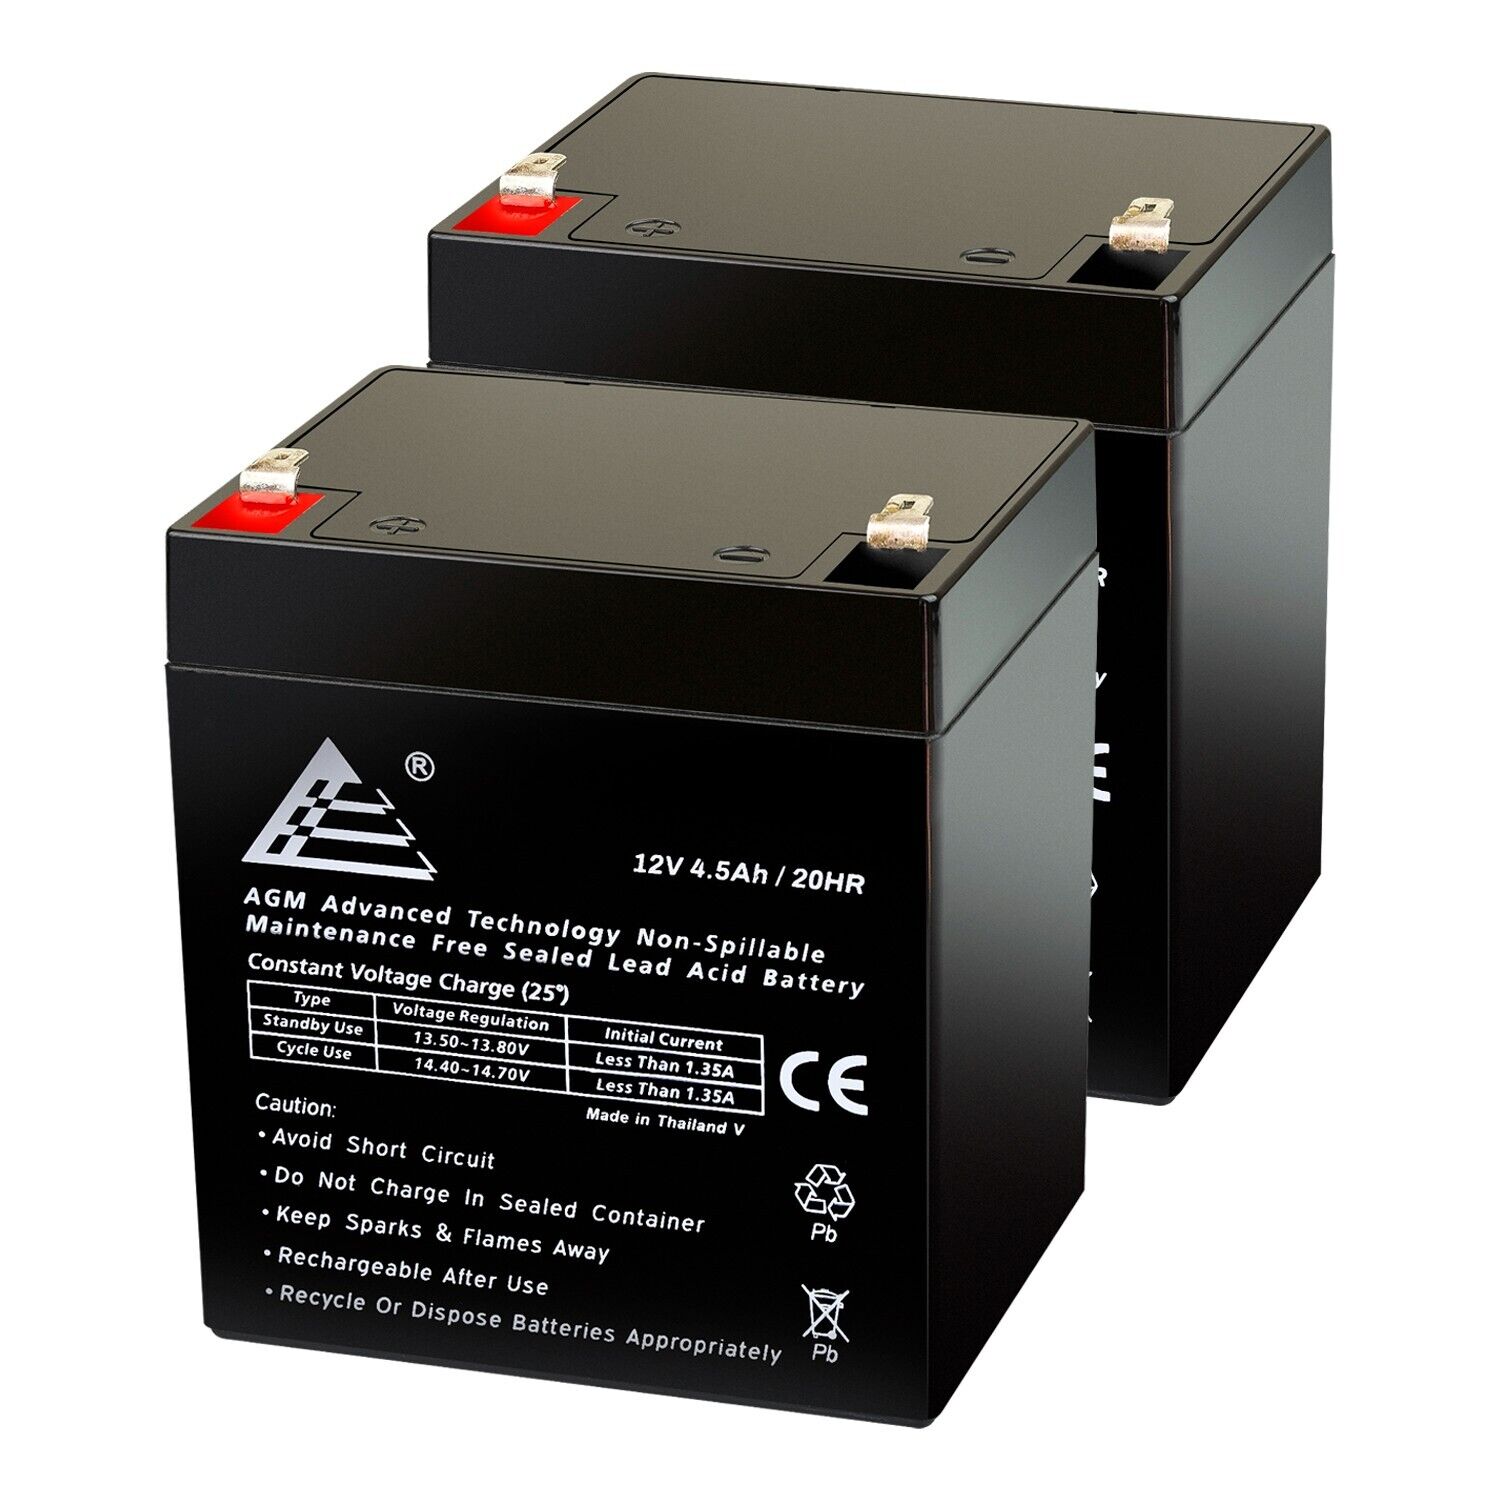 2 Pack_NEW_12V 4.5AH Sealed Lead Acid (SLA) Battery for APC UPS UB1245 eci power Q02BLHFM12_4.5-1